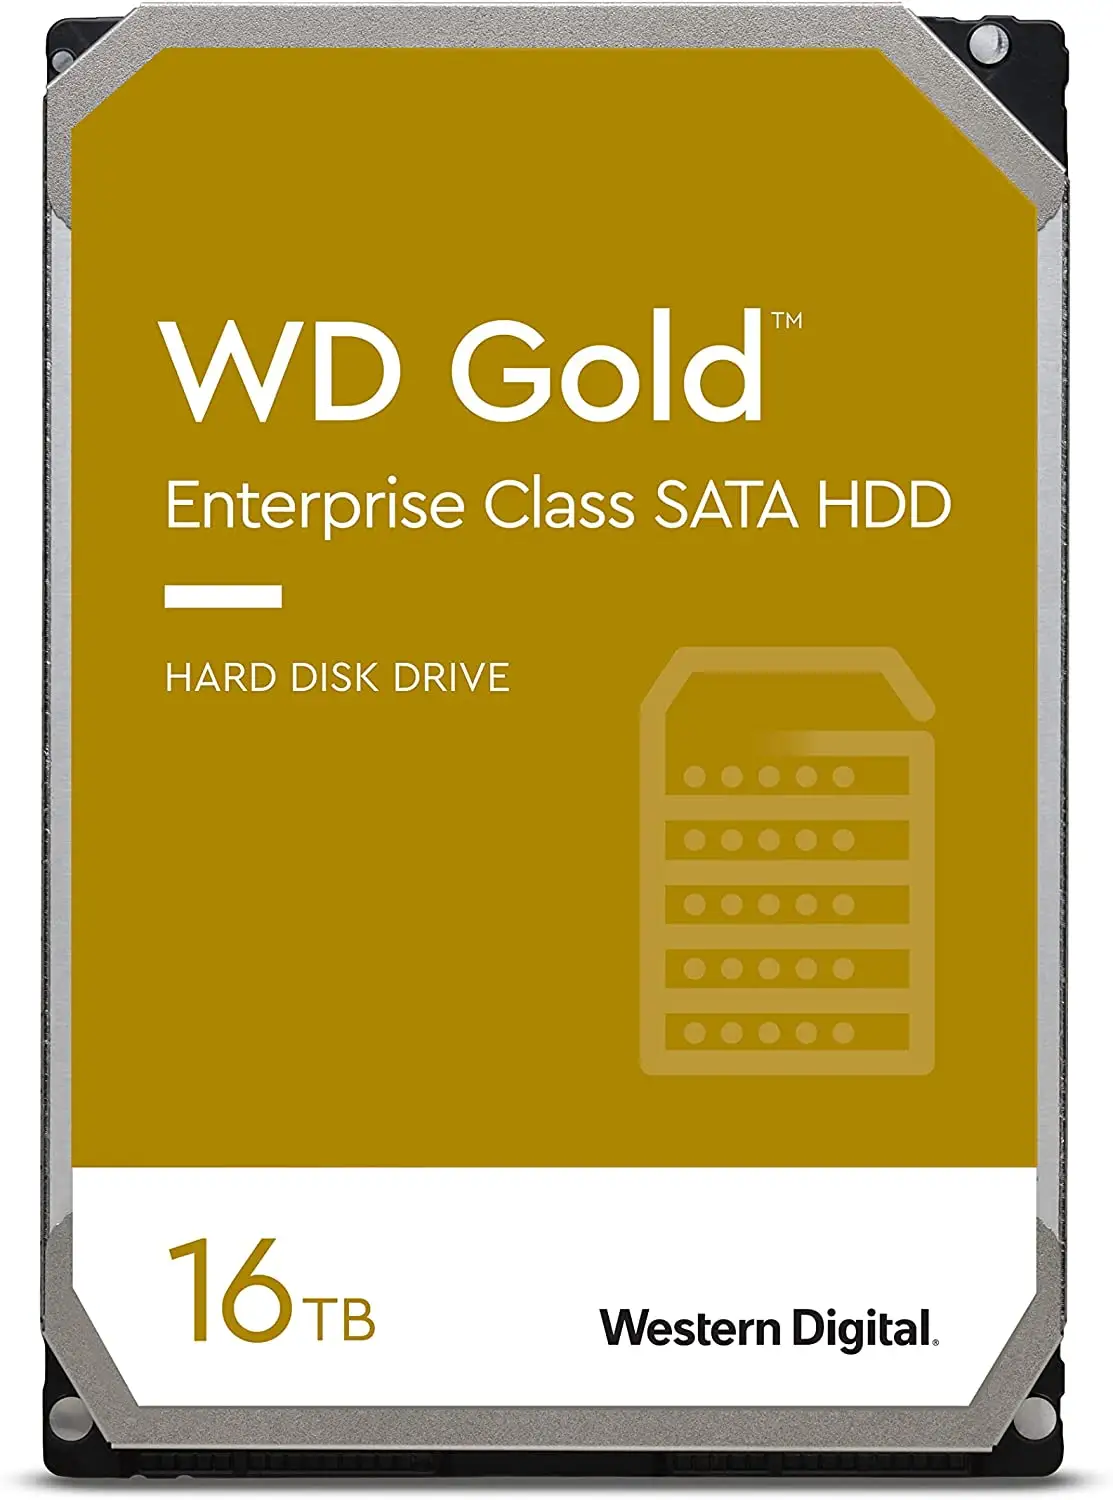 16TB Western Digital WD Gold Enterprise Class 3.5" 7200 RPM Internal Hard Drive
      
              EXPIRED